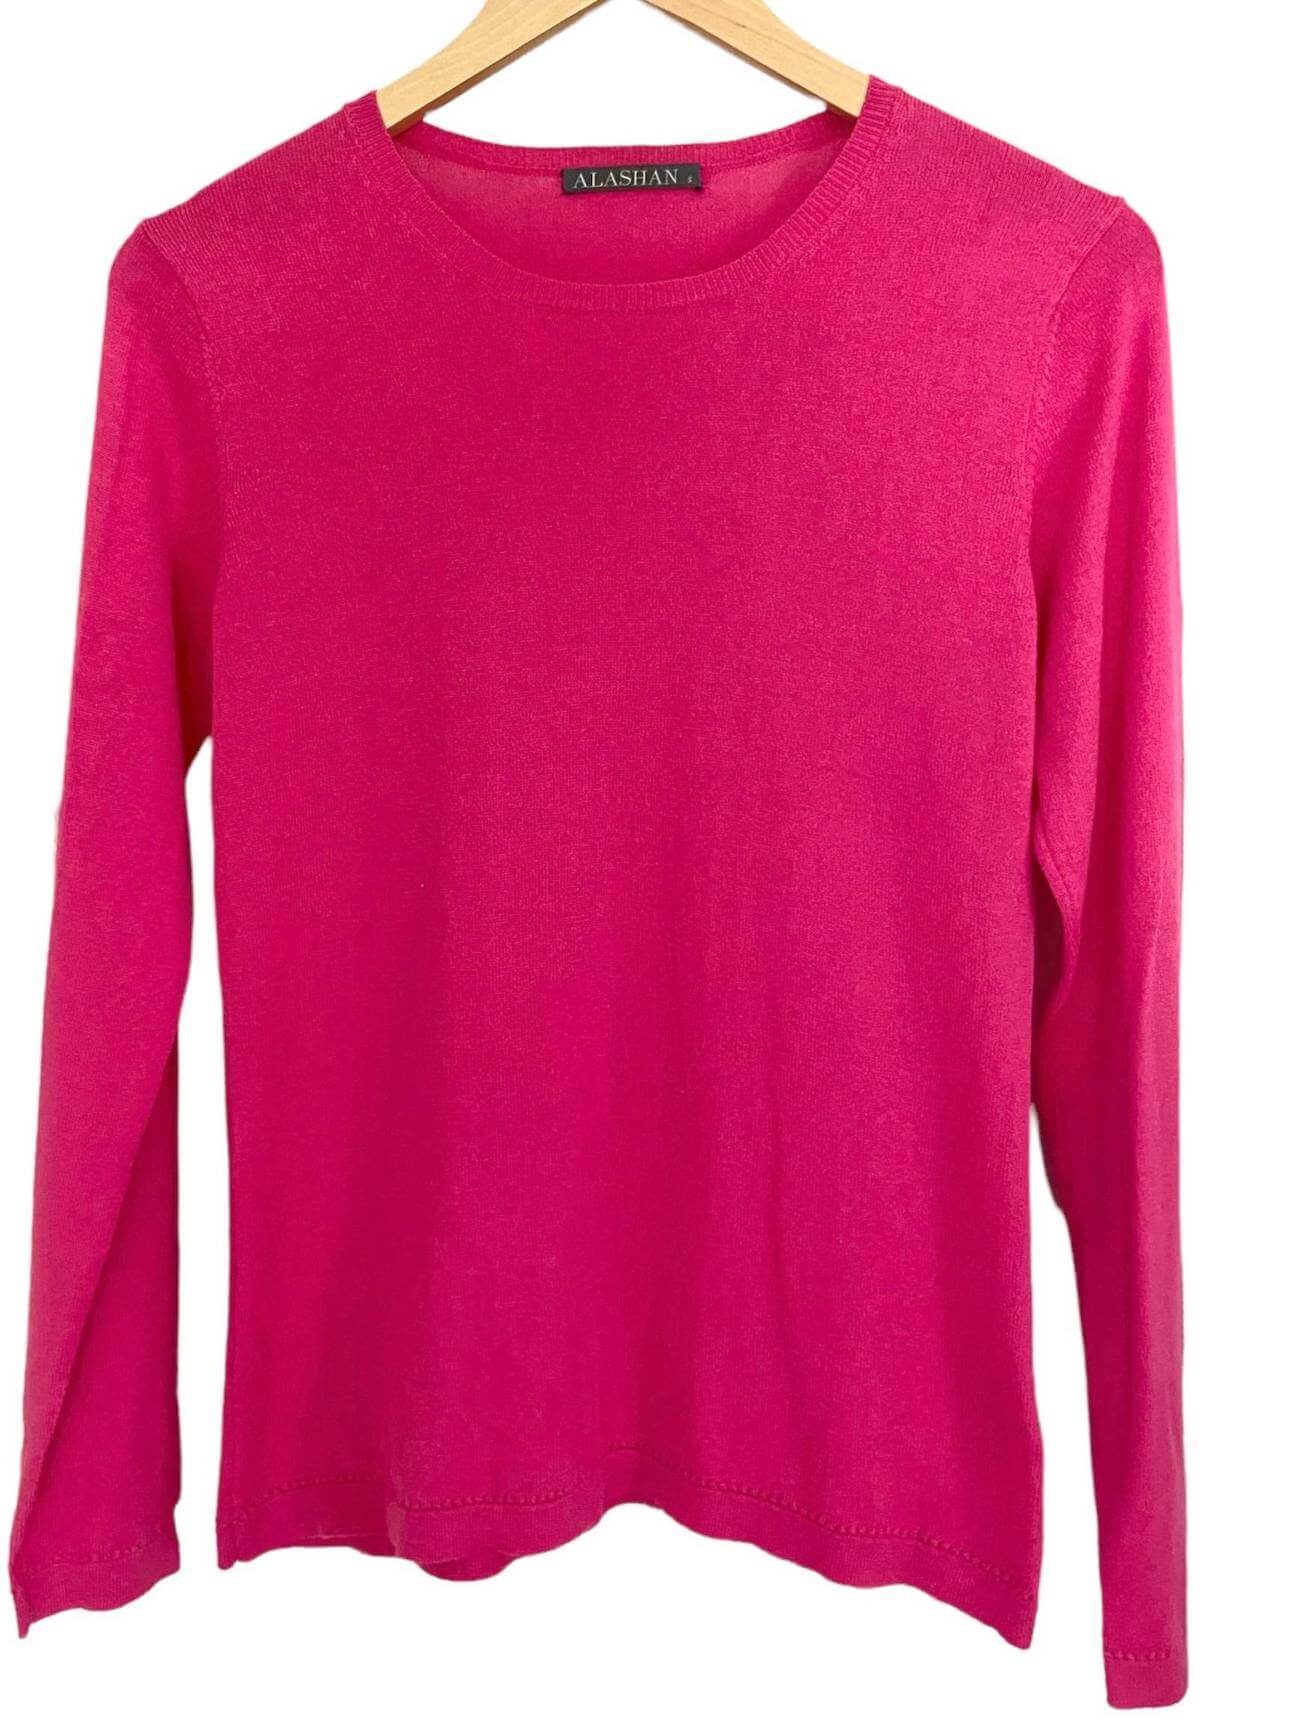 Bright Spring ALASHAN pink crewneck sweater